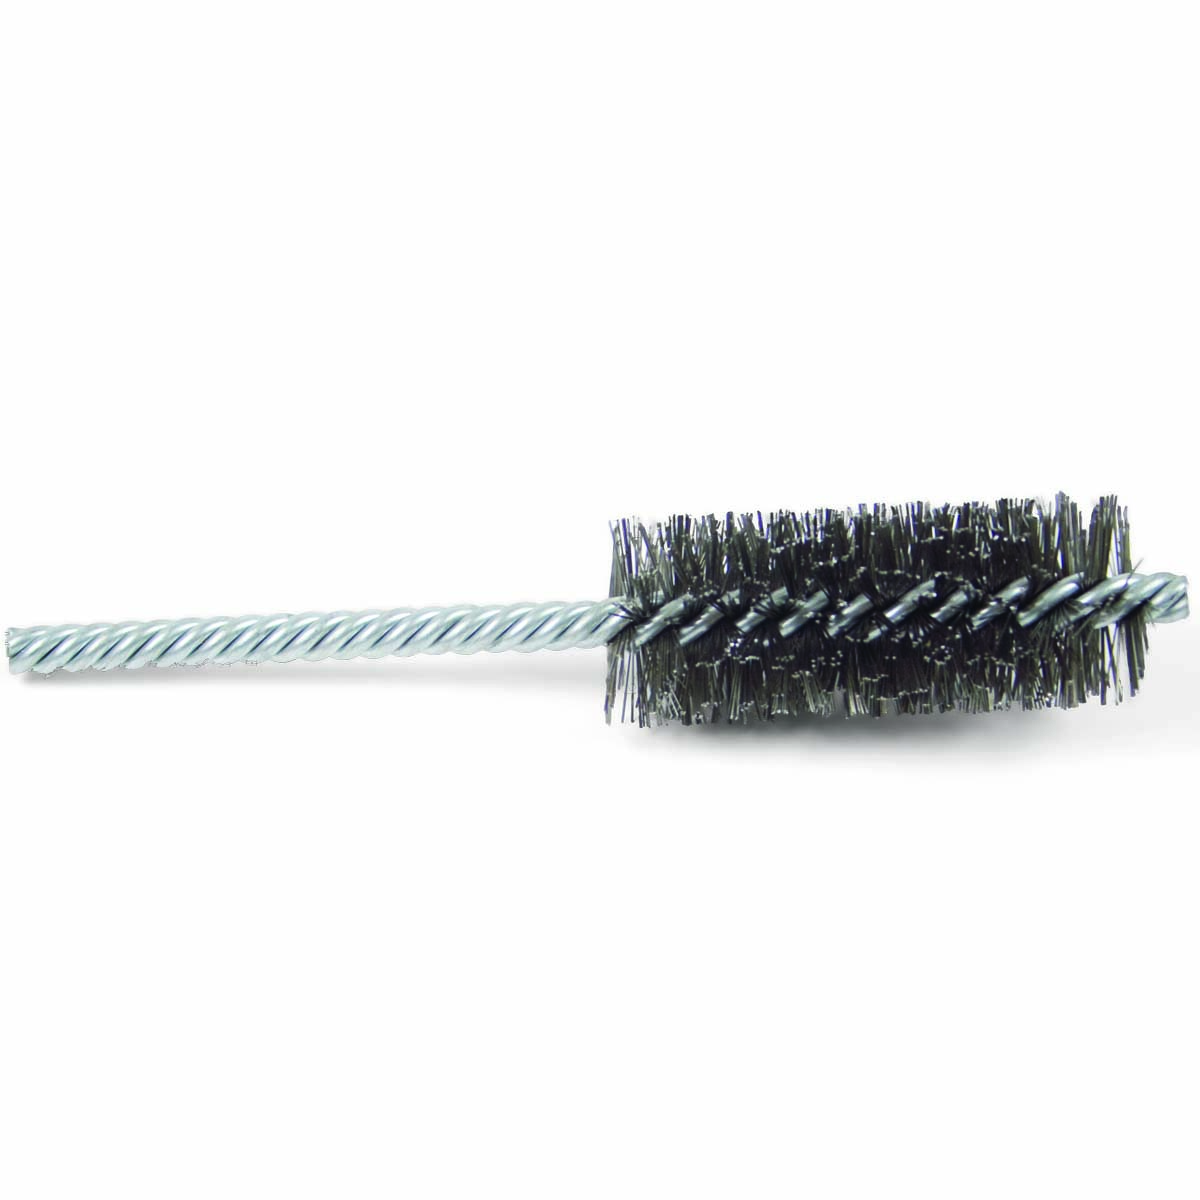 Osborn 7/8 inch tube brush-5 " OAL-wire size .006 